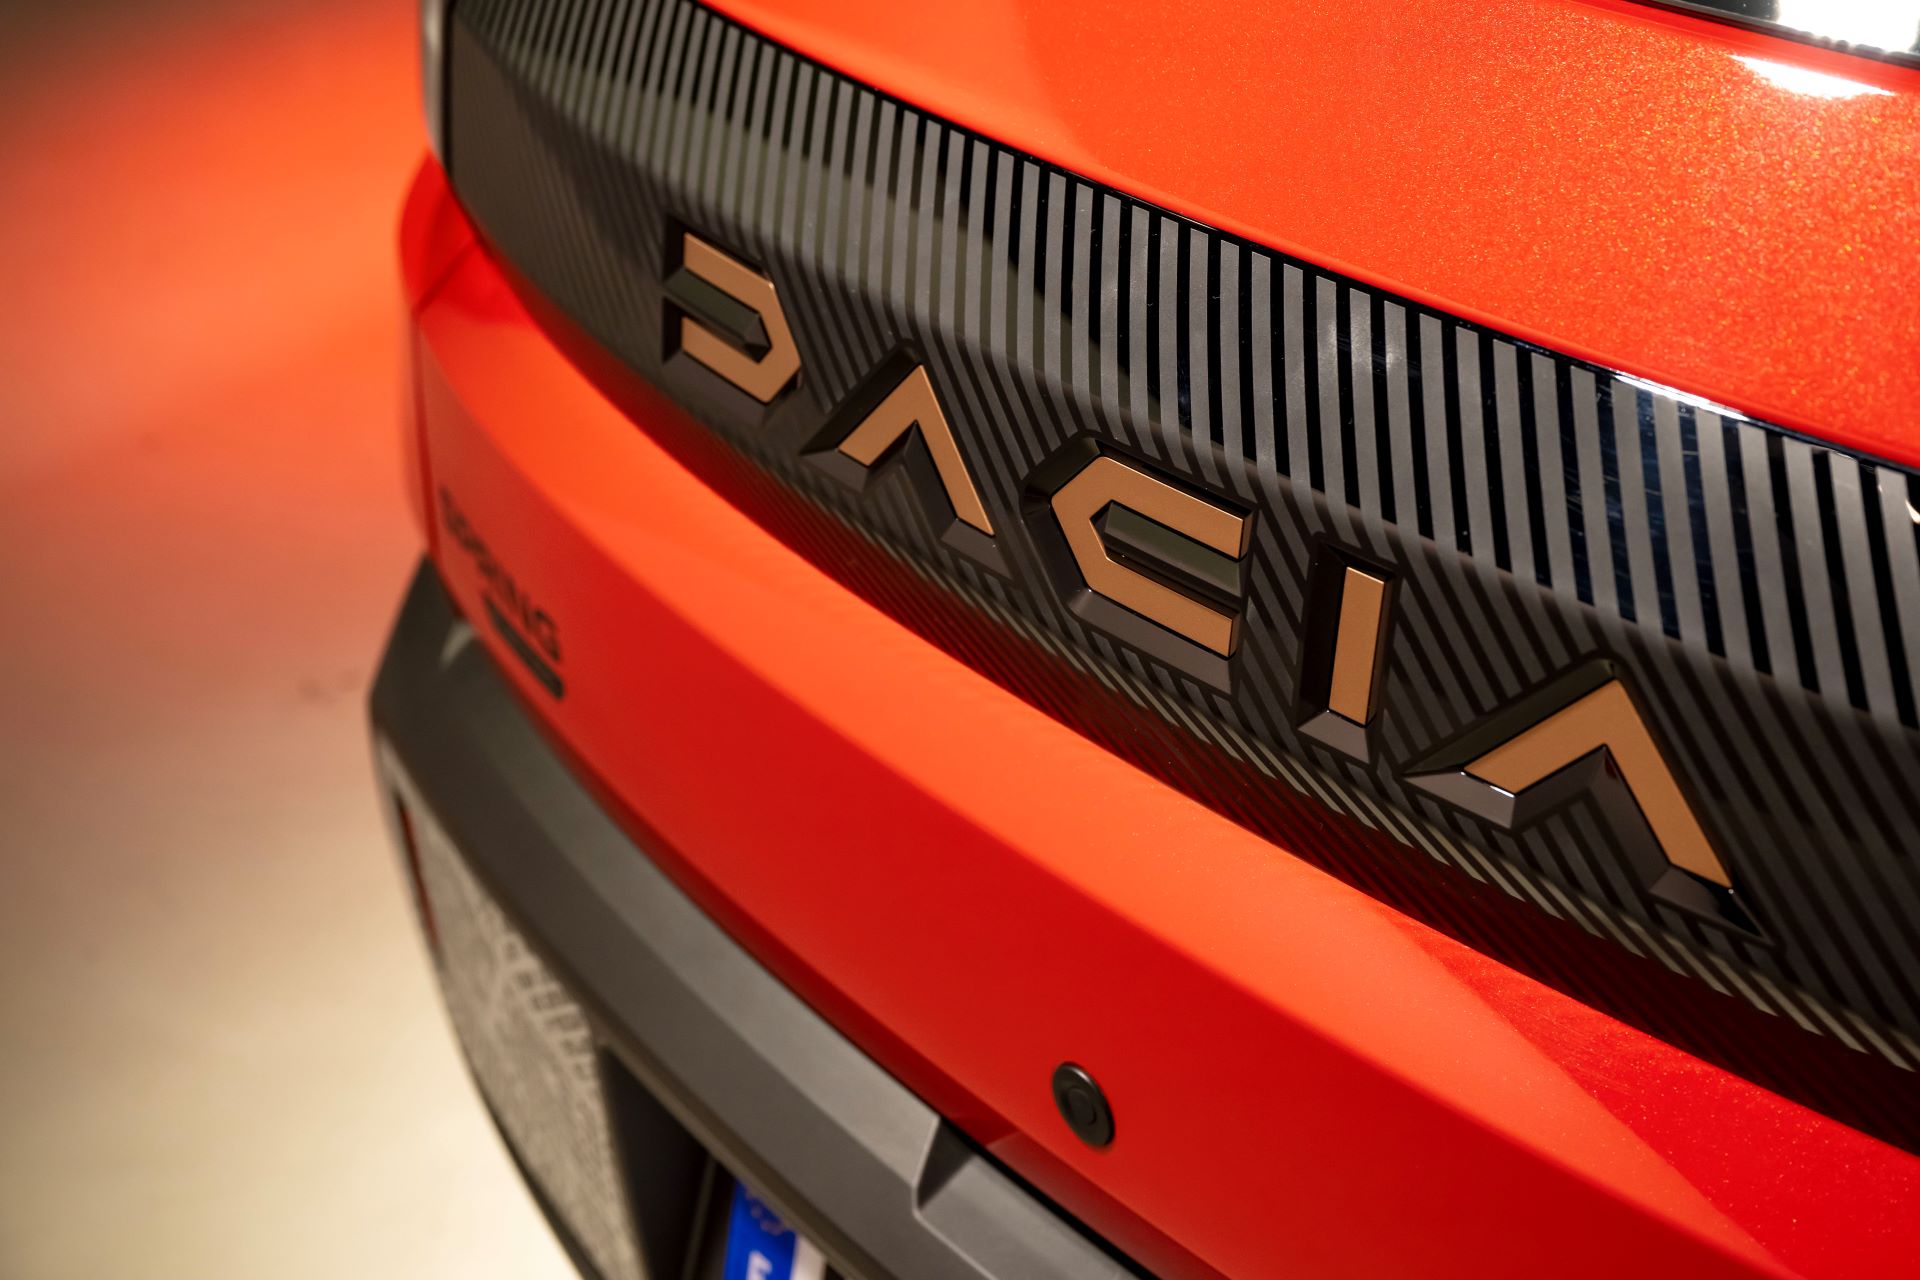 Dacia presents three world premieres at the Geneva International Motor Show